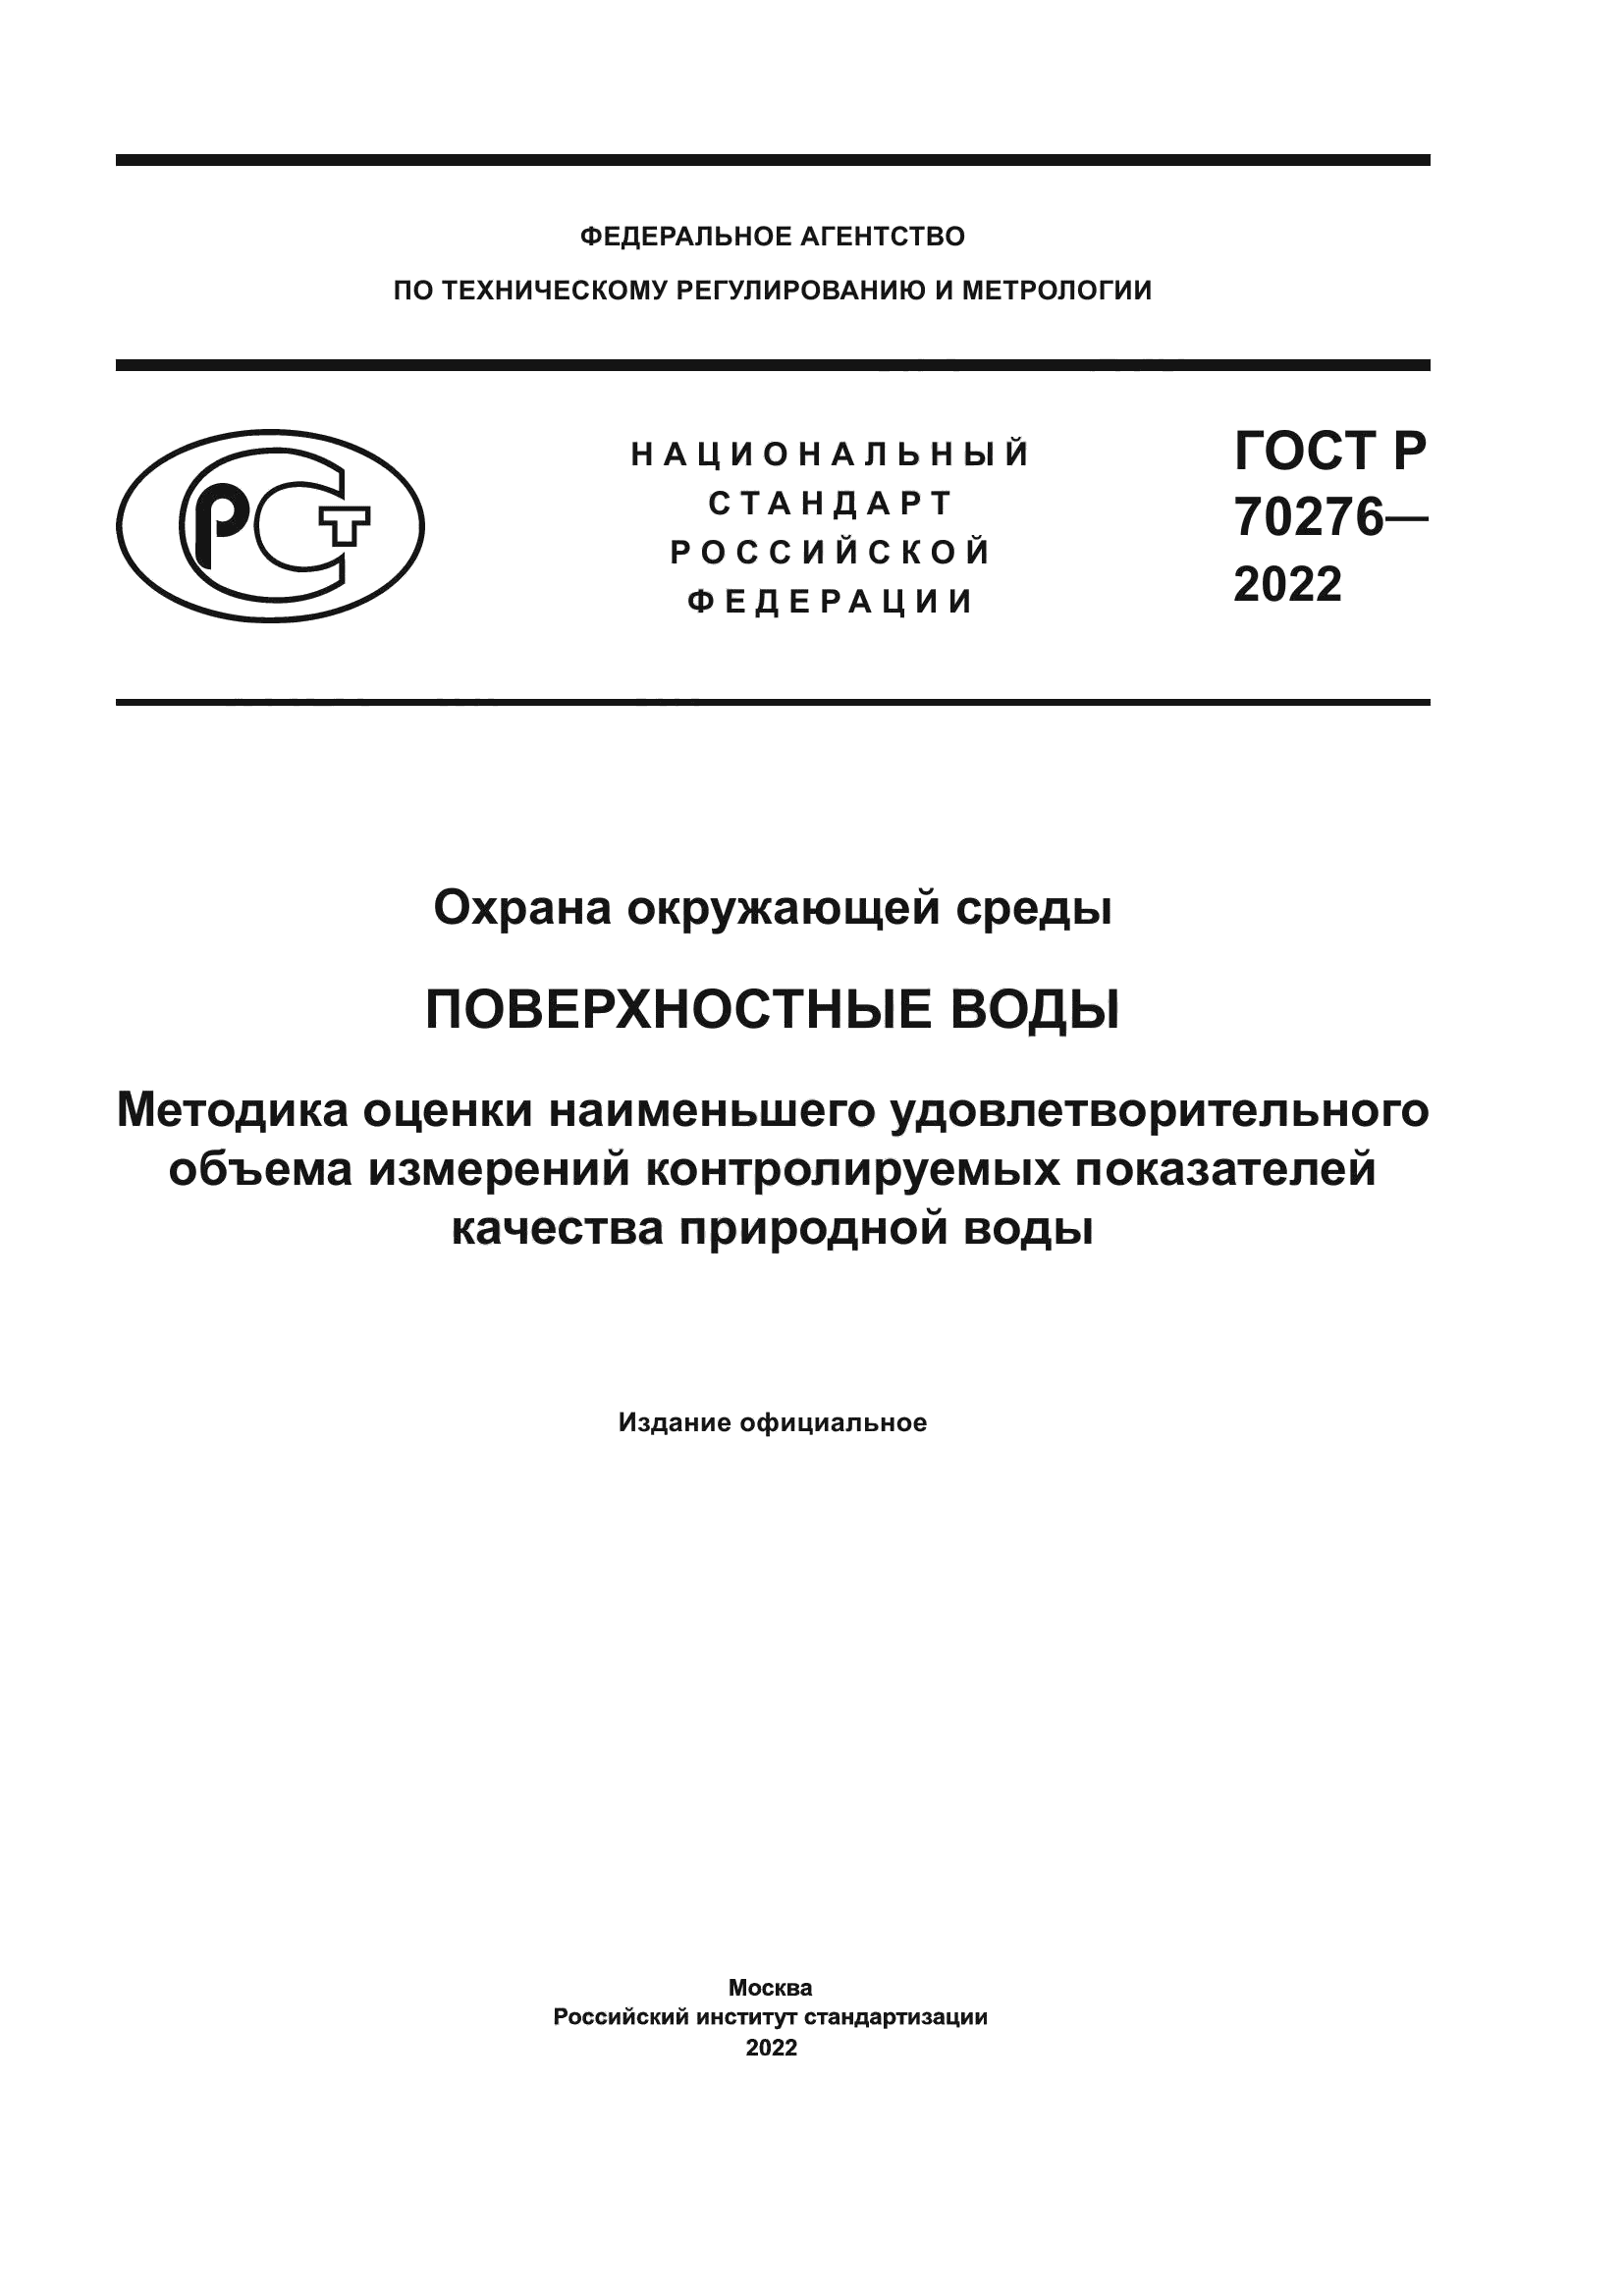 ГОСТ Р 70276-2022